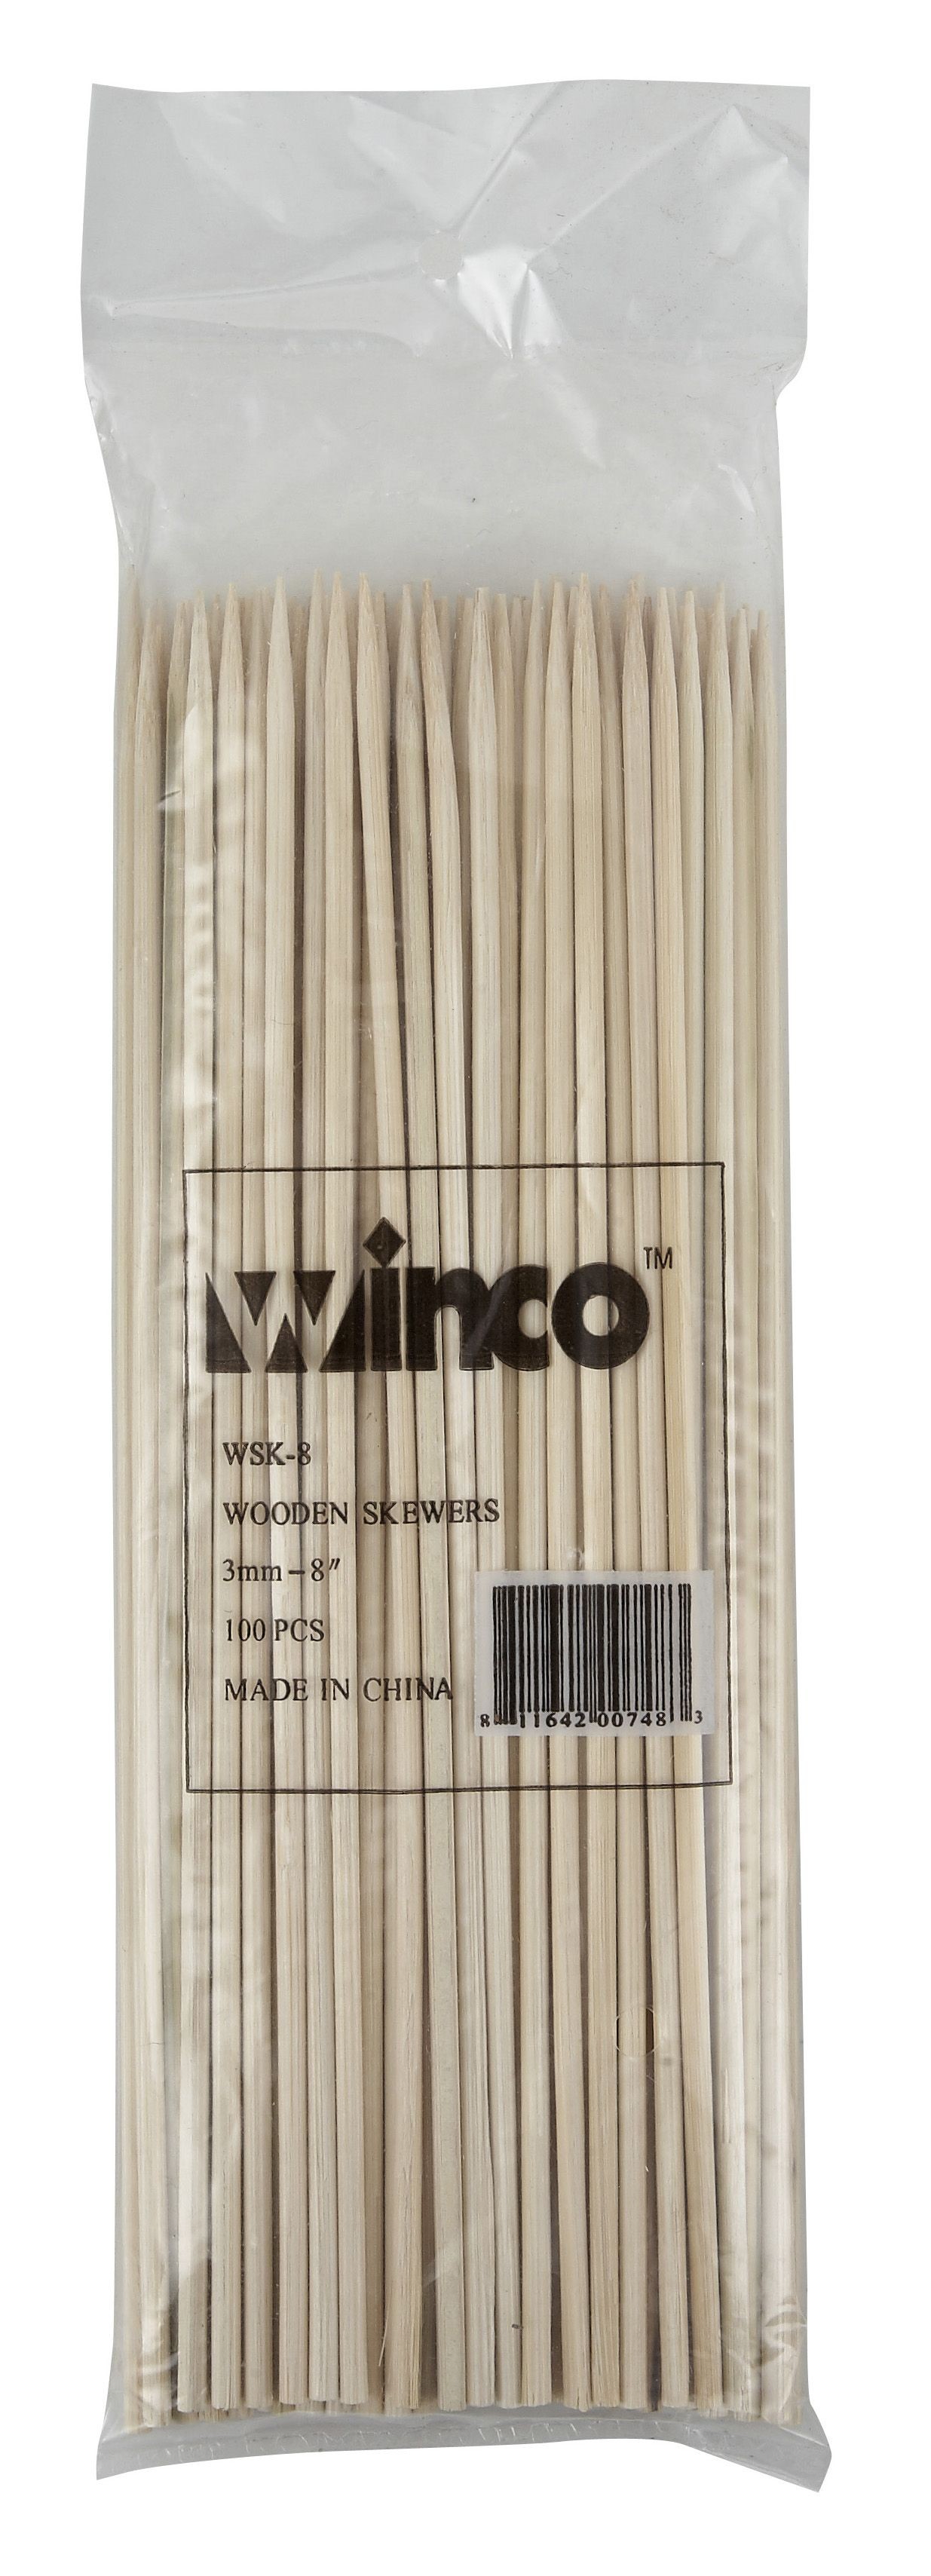 Winco WSK-08 Bamboo Skewers 8"